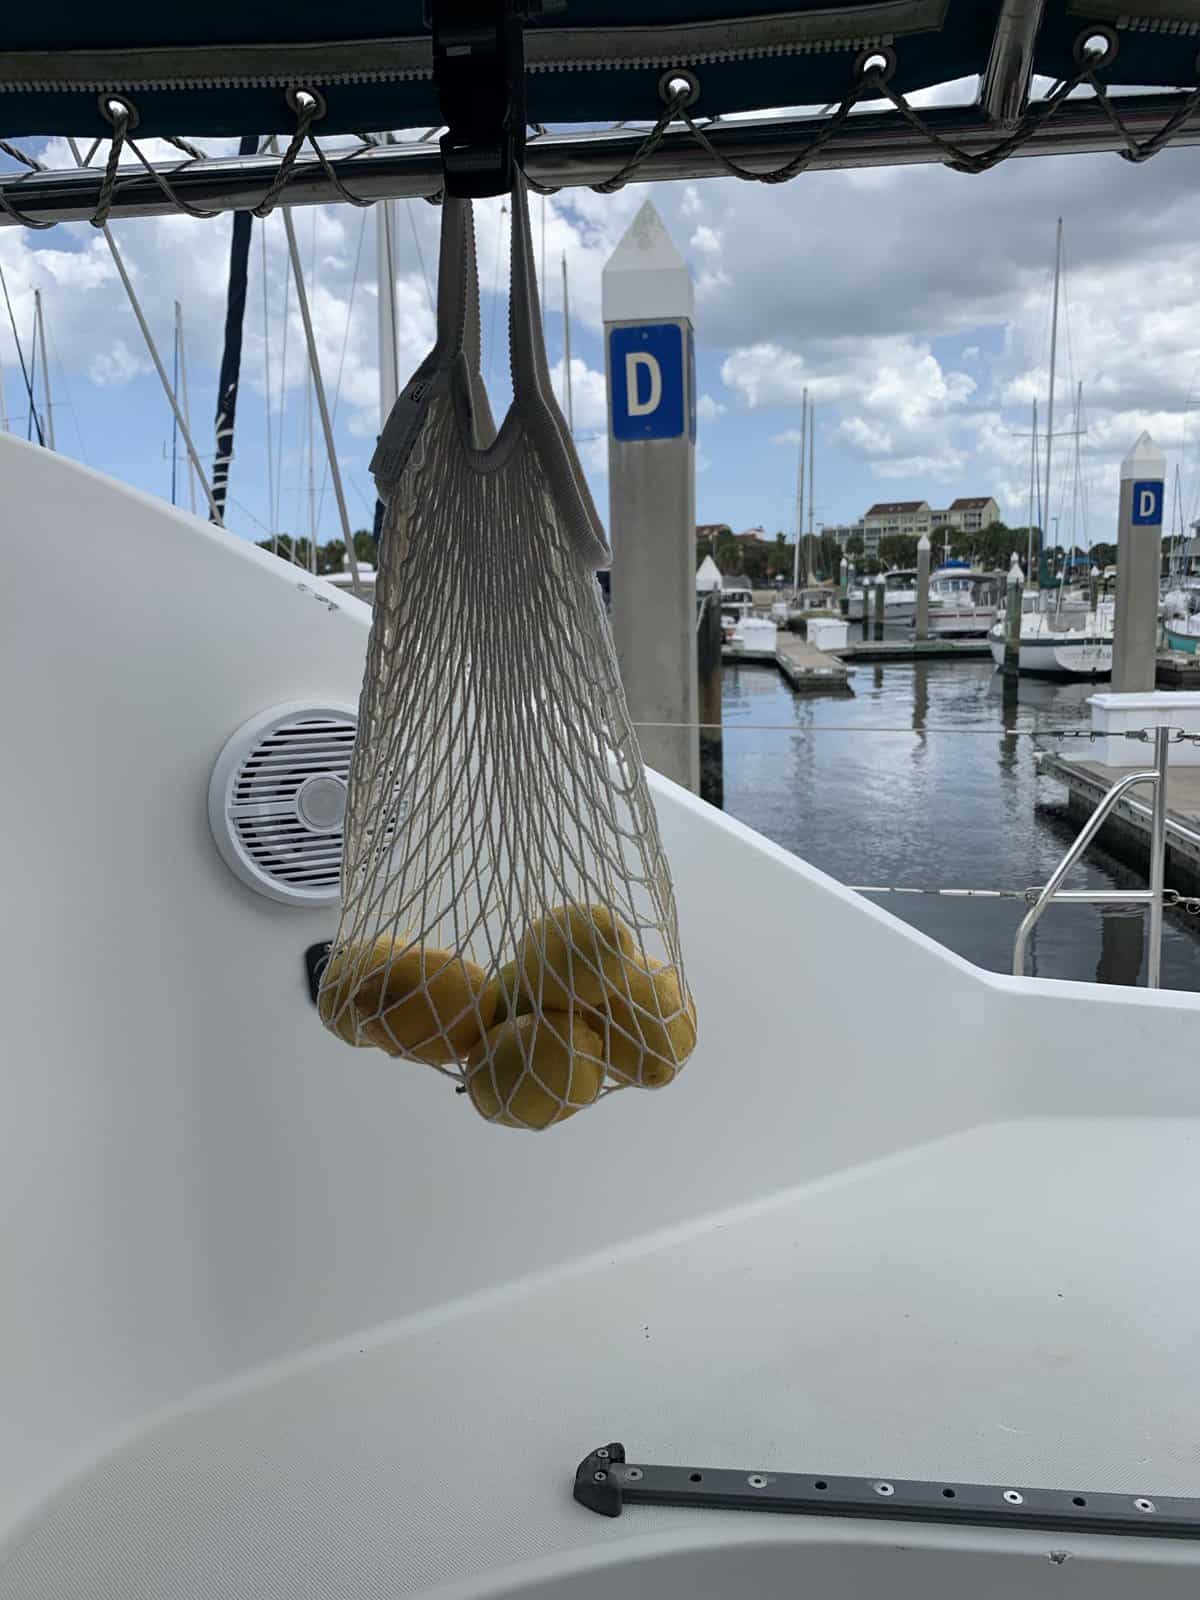 lemons hanging in a mesh bag on a sailboat